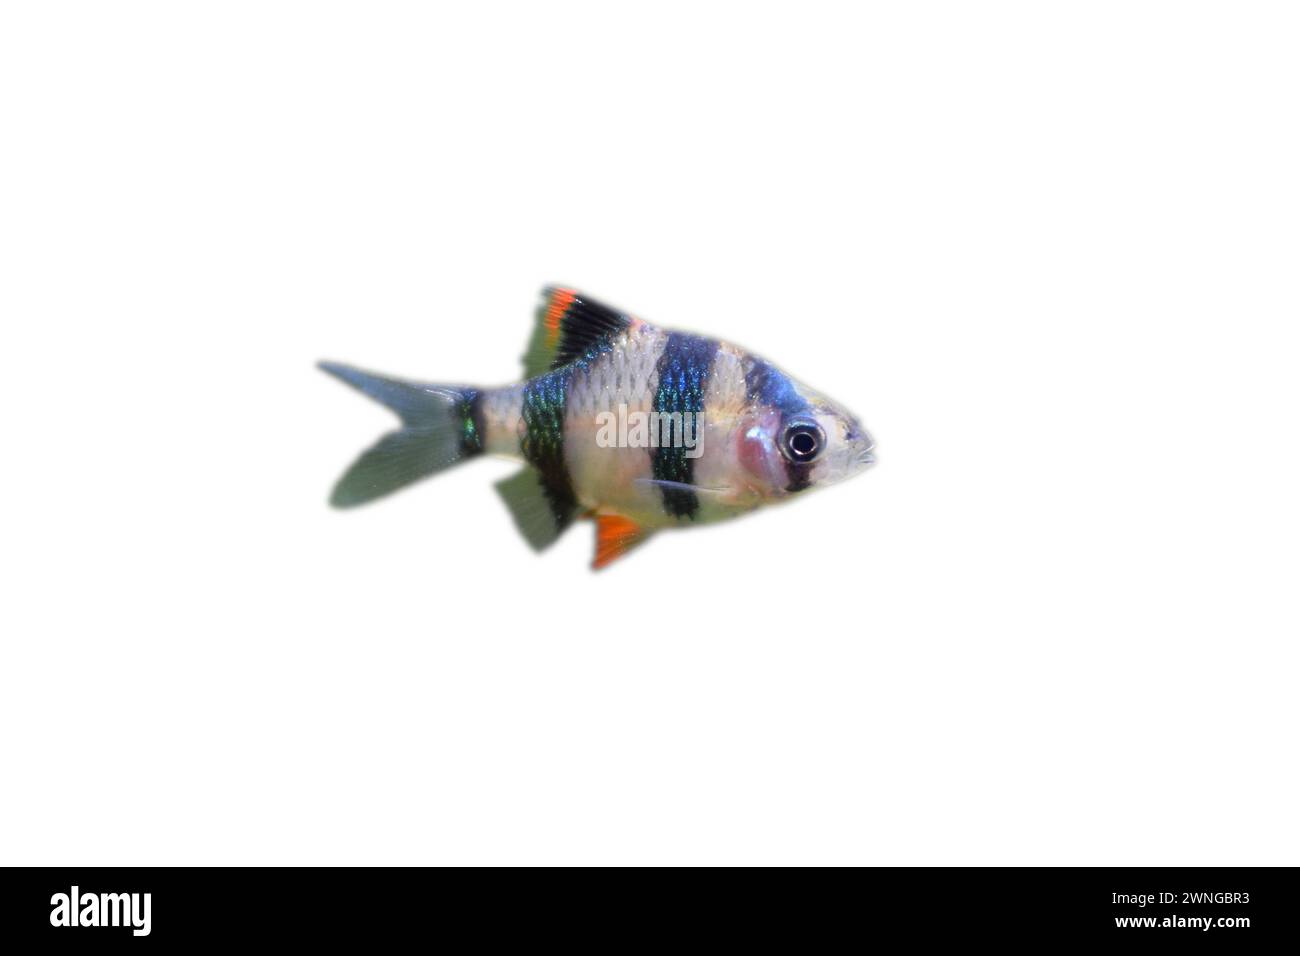 Sumatran barb, aquarium fish on white background Stock Photo